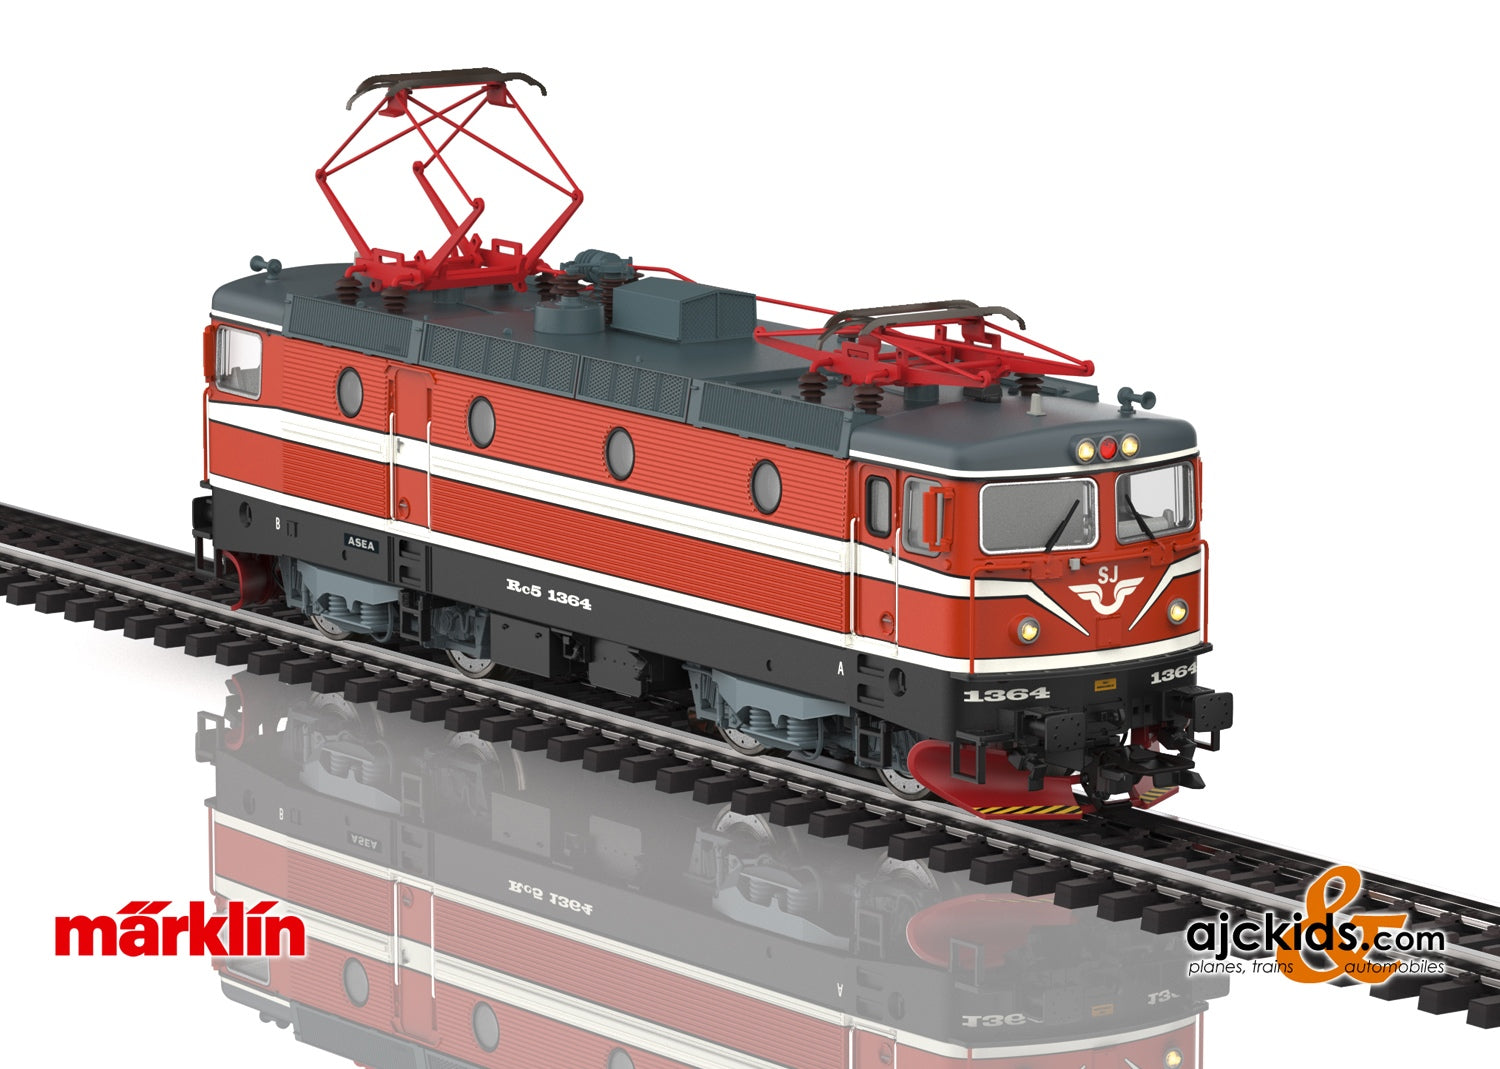 Marklin 39281 - Class Rc 5 Electric Locomotive  at Ajckids.com